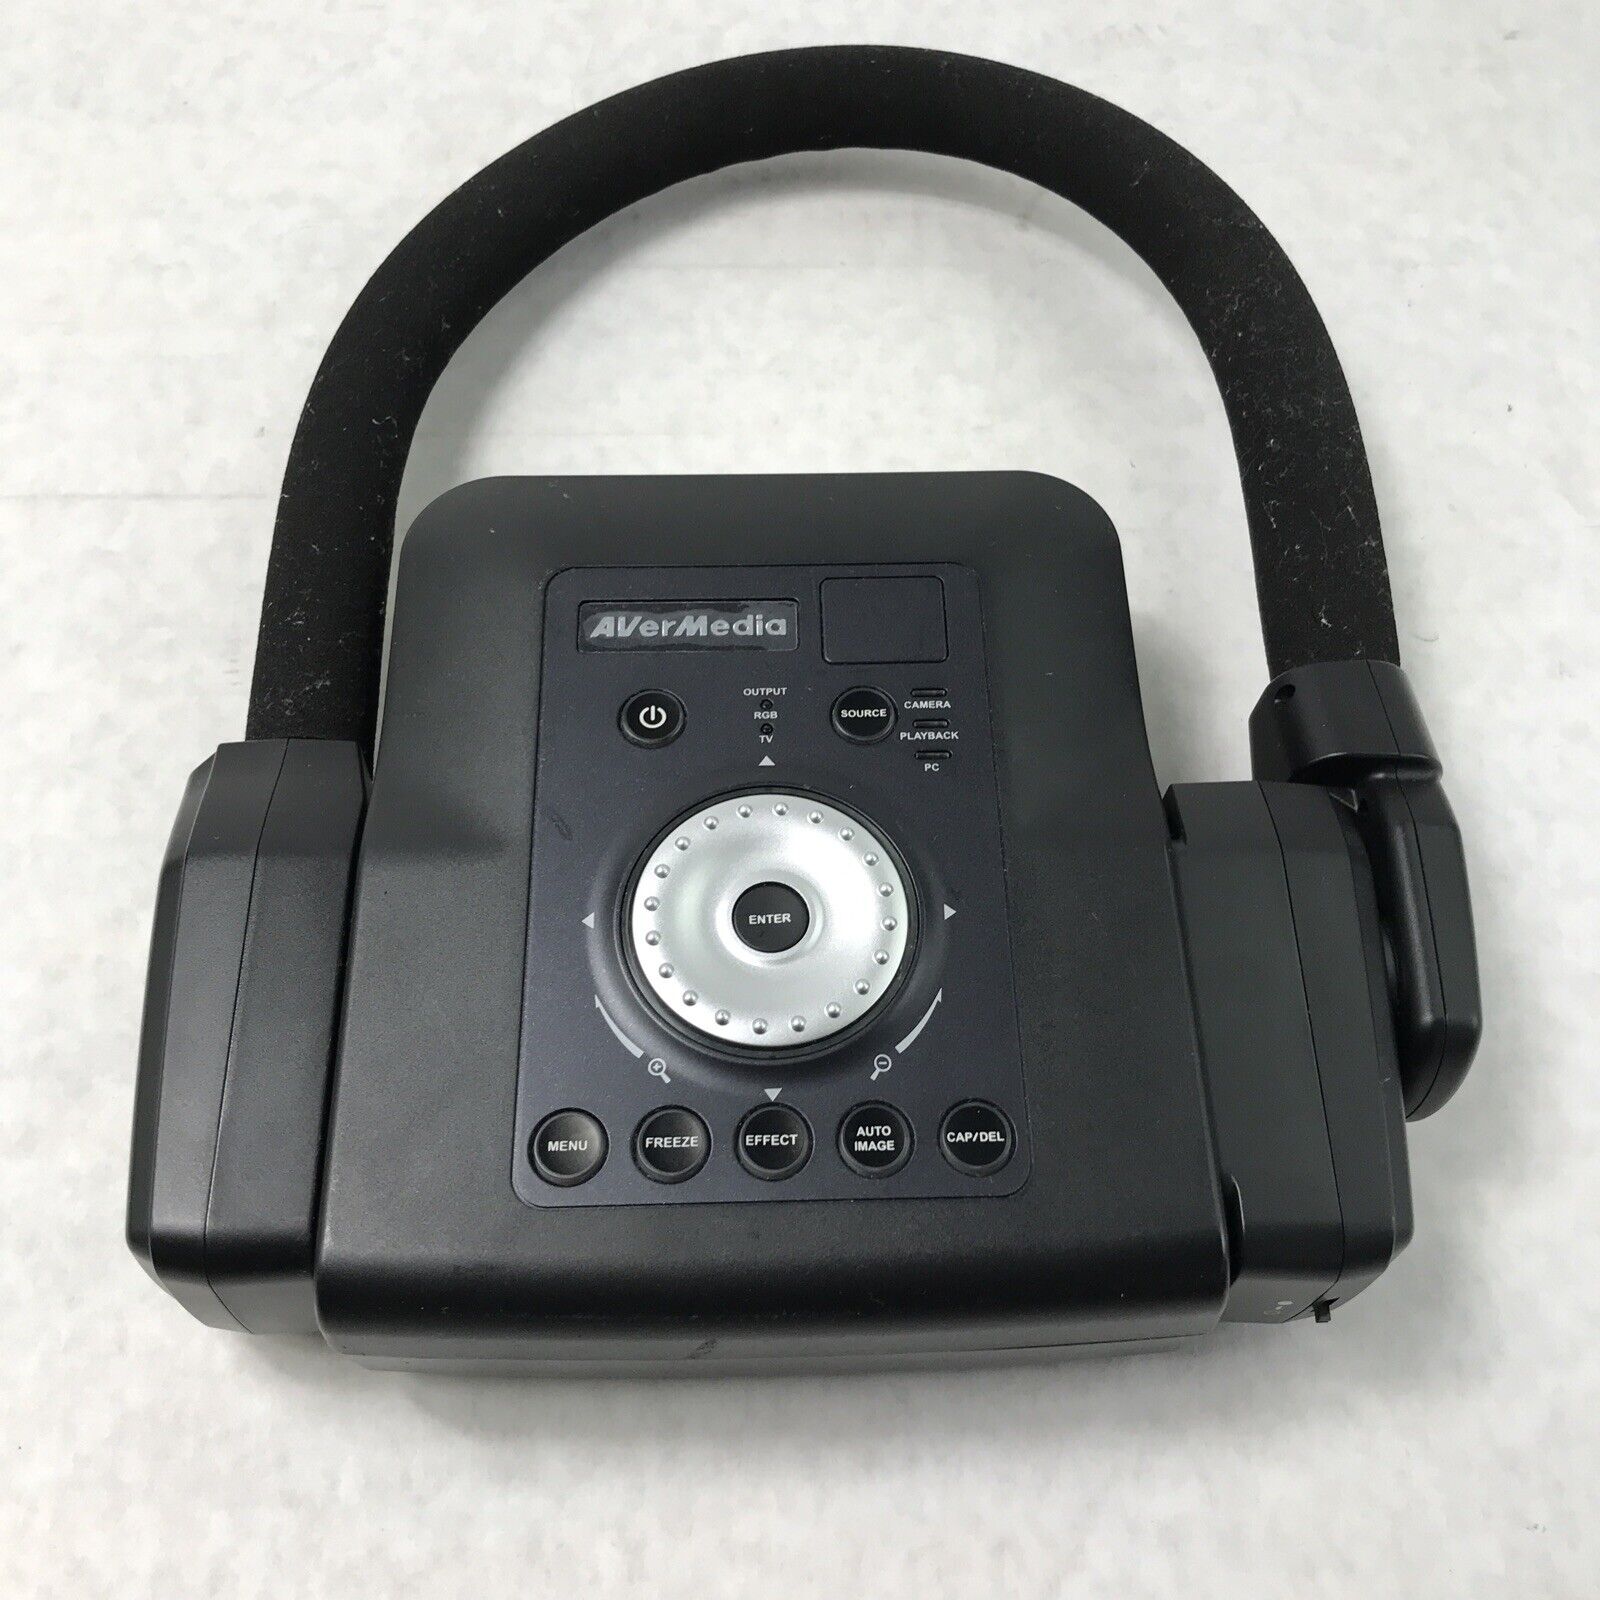 AverVision AVerMedia CP130 Portable Digital Document Camera Presenter